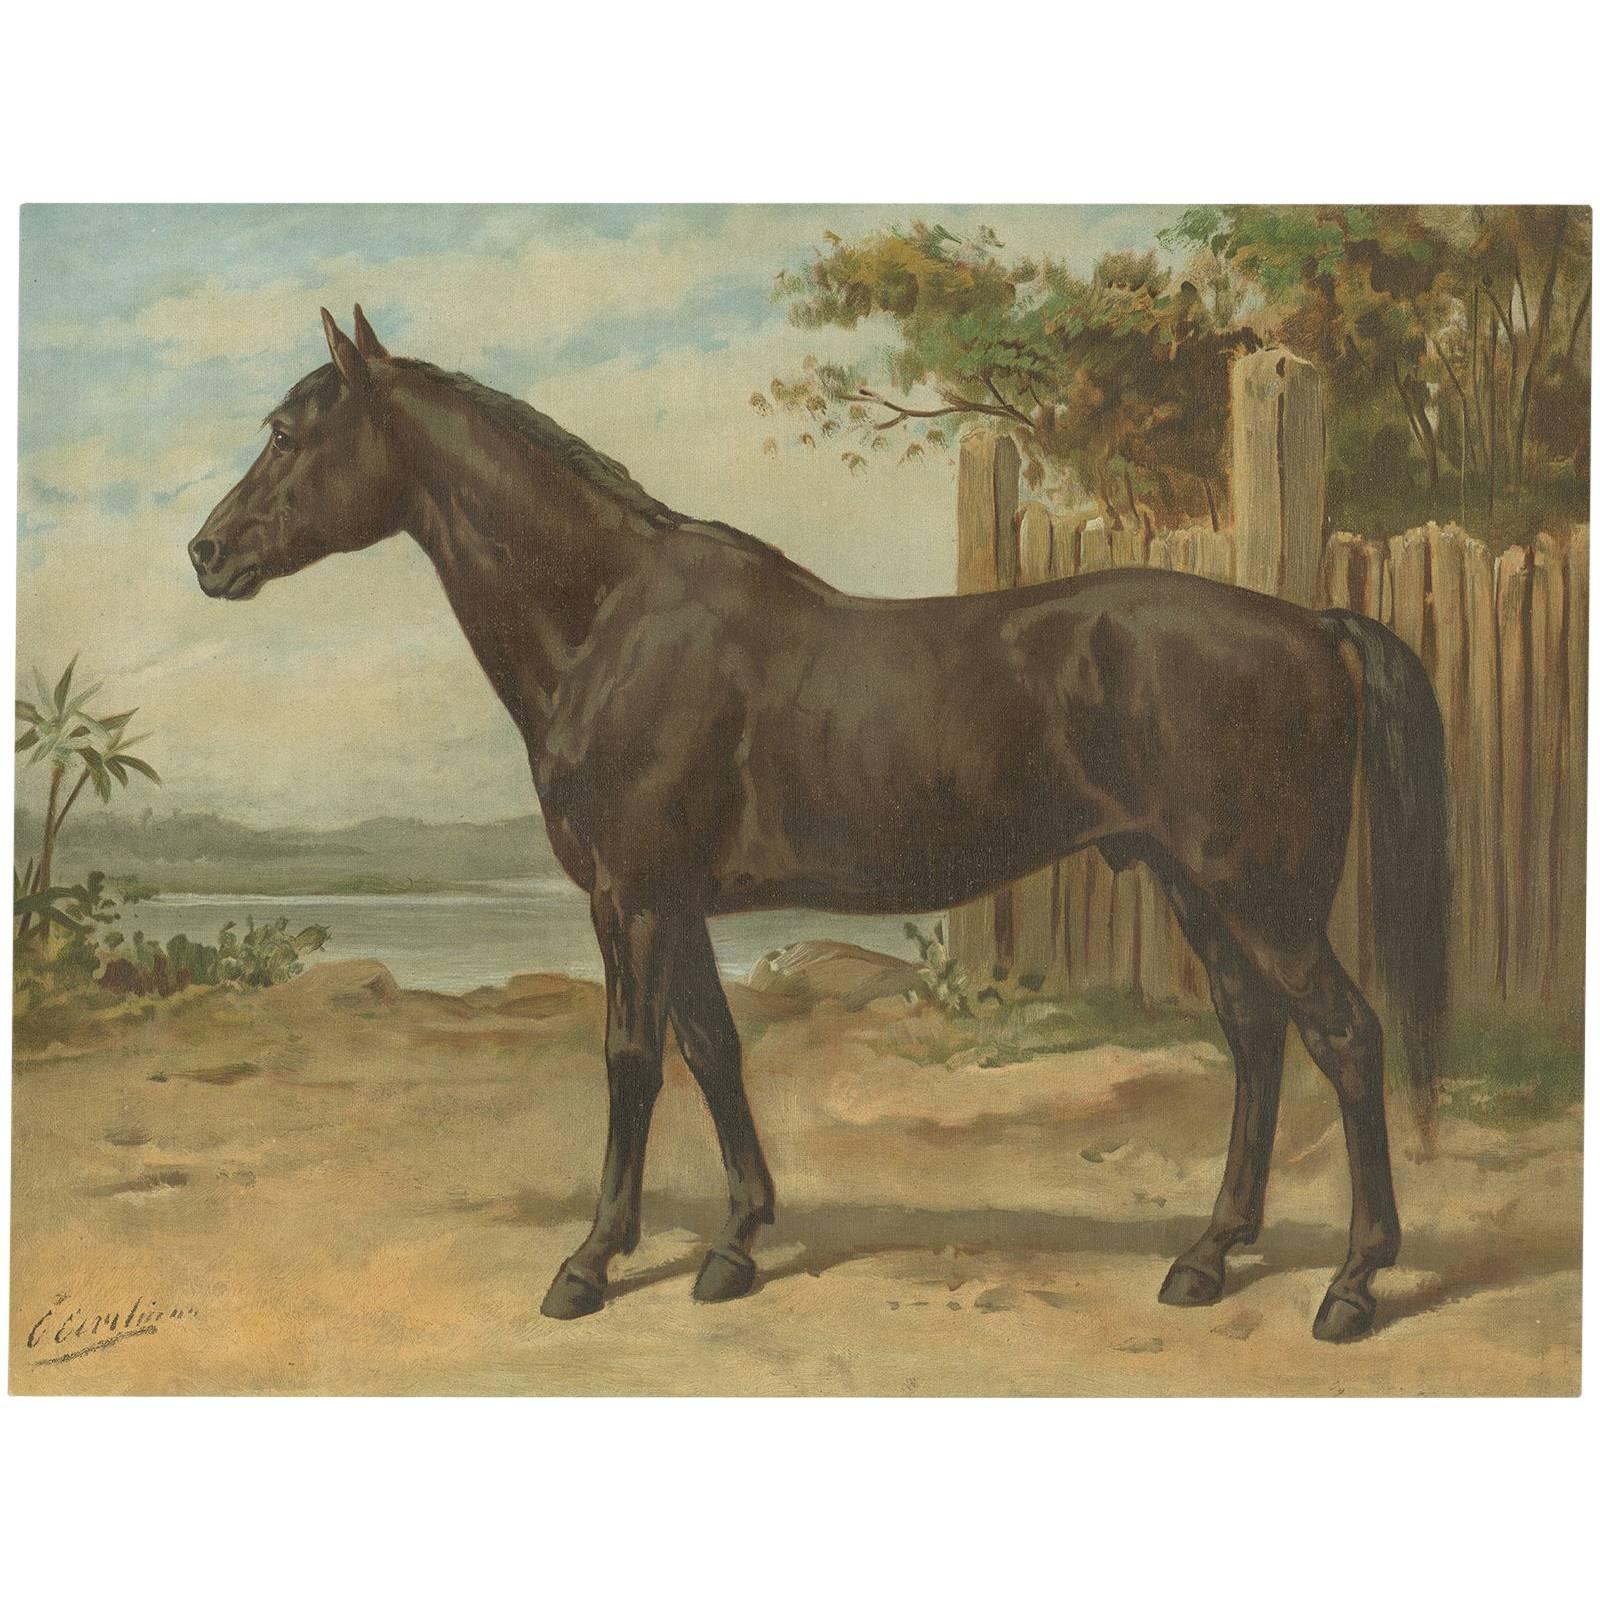 Original Antique Print of the Australian Horse by O. Eerelman, 1898